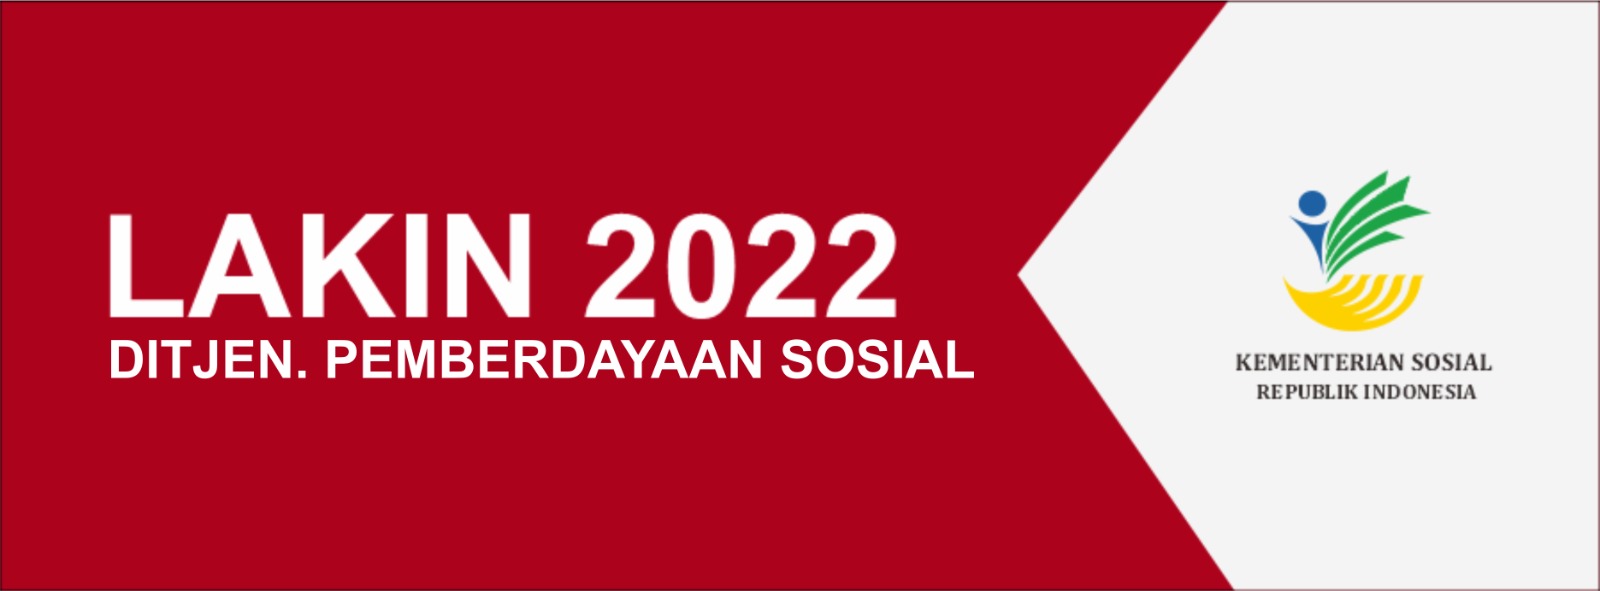 Laporan Kinerja Ditjen. Pemberdayaan Sosial Tahun 2022